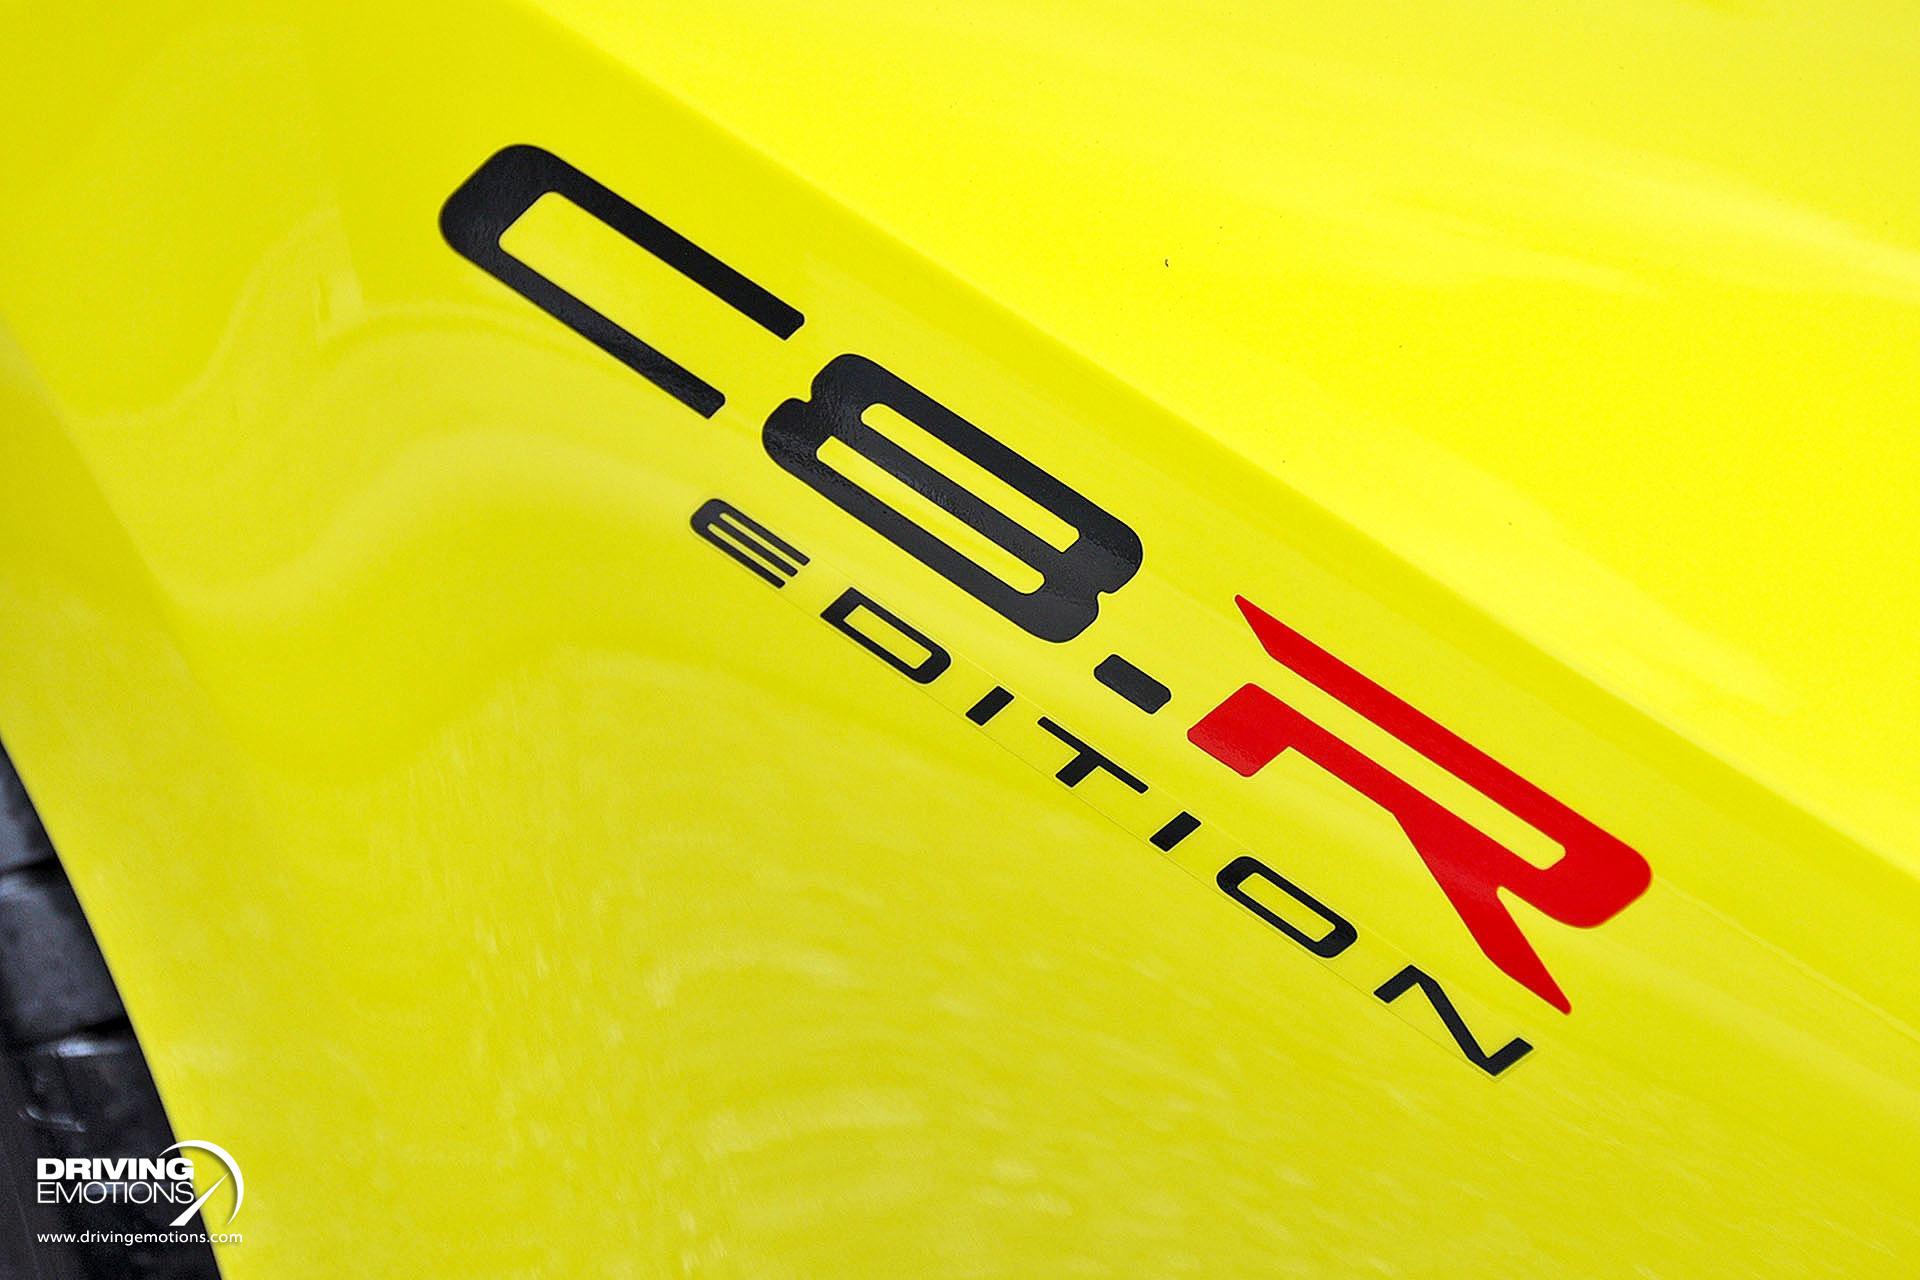 Used 2022 Chevrolet Corvette C8.R Convertible Stingray 3LT Z51 C8.R SPECIAL EDITION! 153 OF 1000 BUILT! FRONT LIFT! | Lake Park, FL